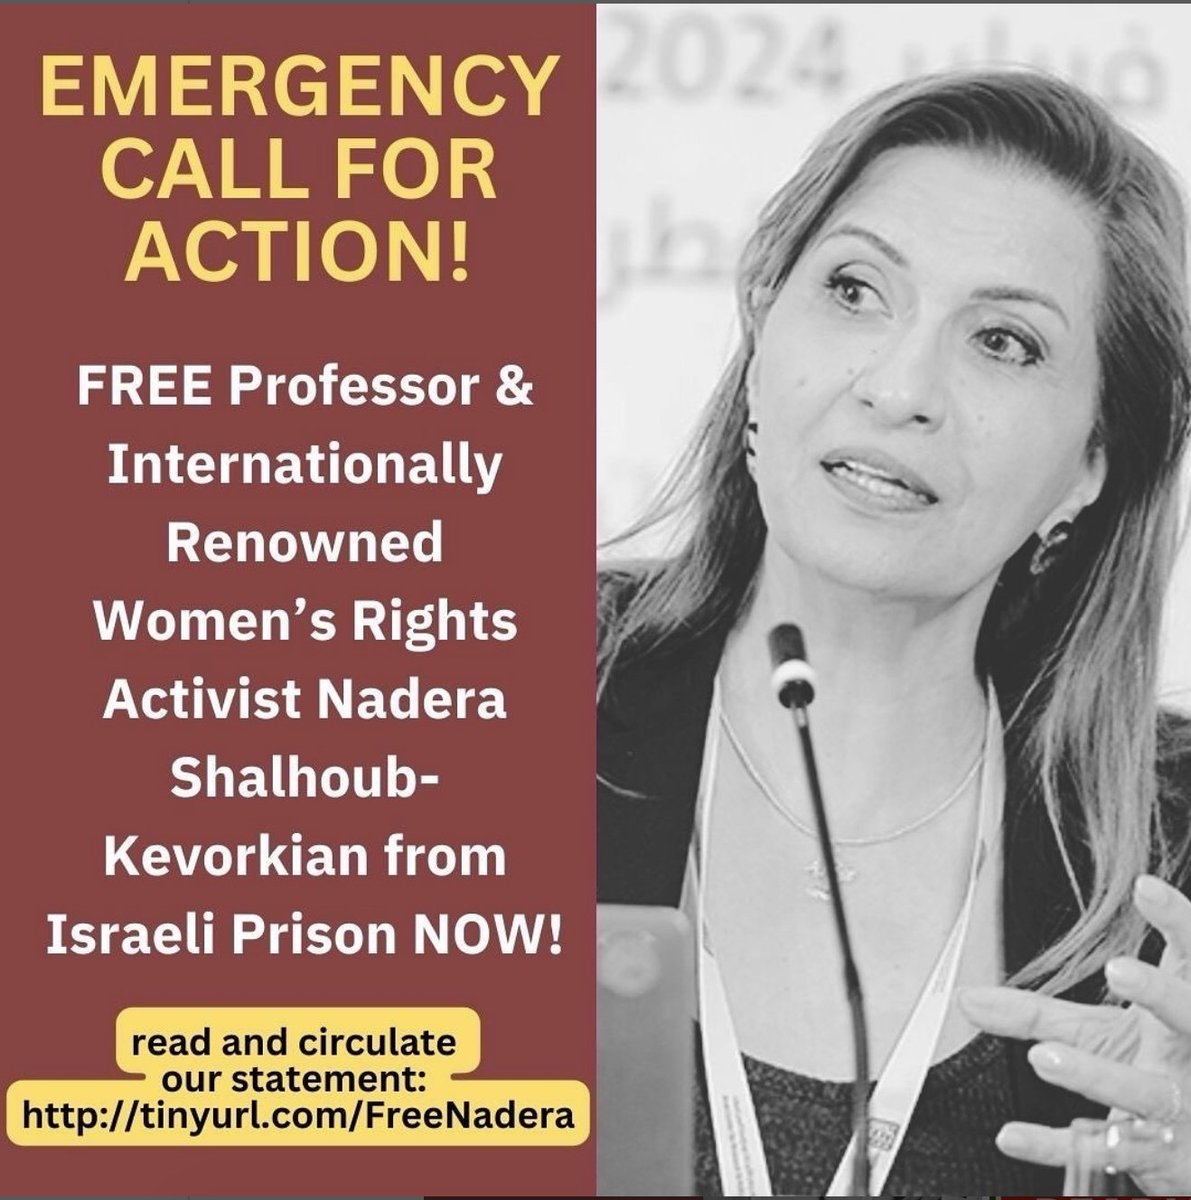 You will not silence us! #FreeNadera @HebrewU  
#Stopthegenocide #FreePalestine